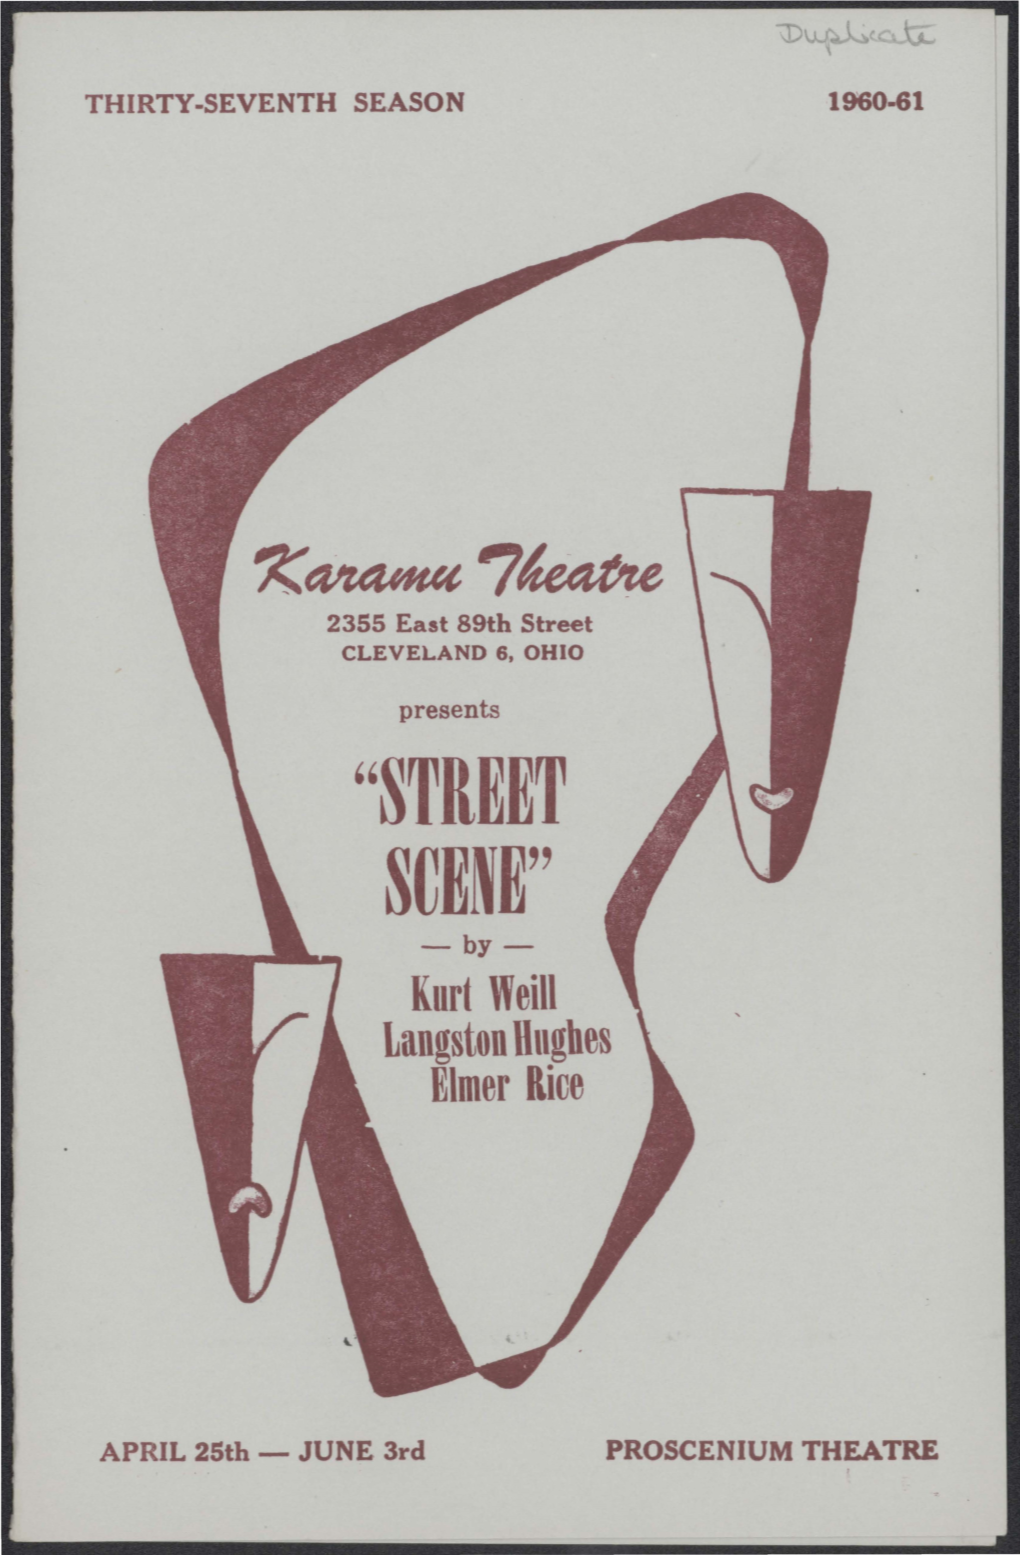 "STREET SCENE" -By- Knrt Weill Langston Hughes Elmer Rice